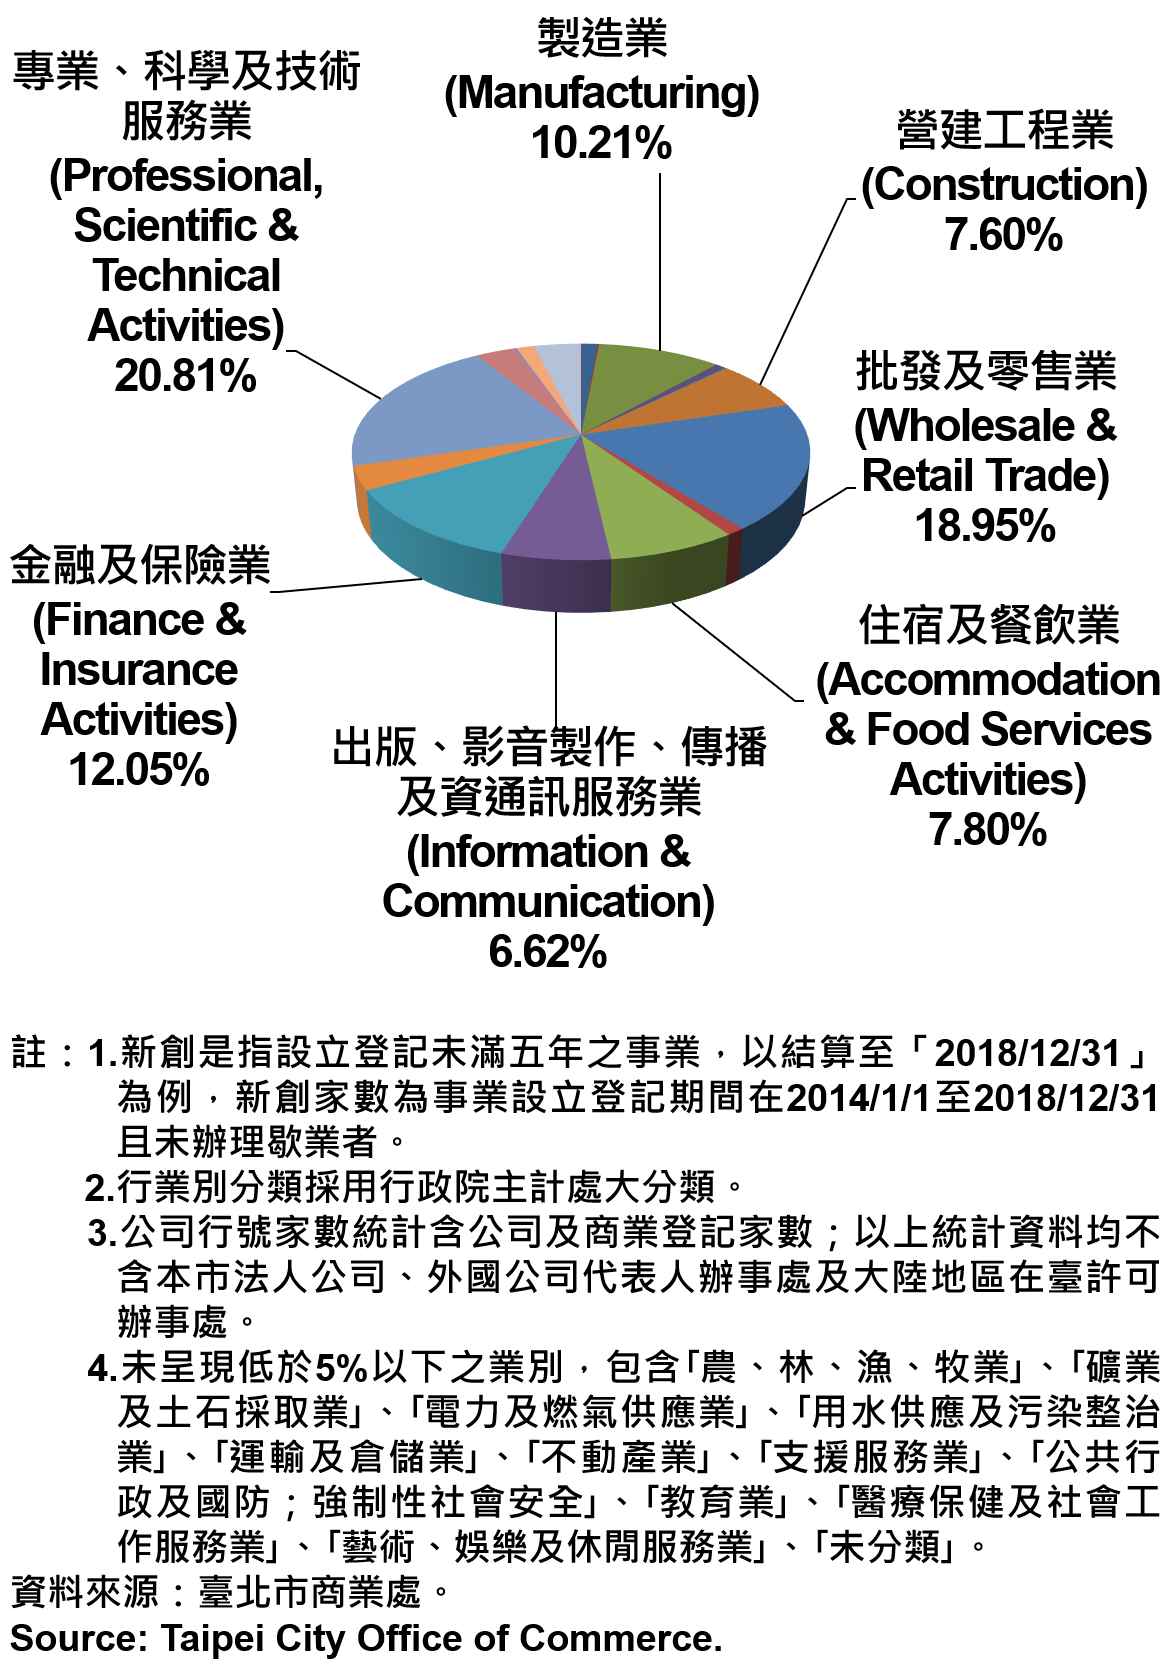 臺北市新創公司行號業別分布情形—現存家數 Newly Registered Companies in Taipei City by Industry - Number of Current - 2020